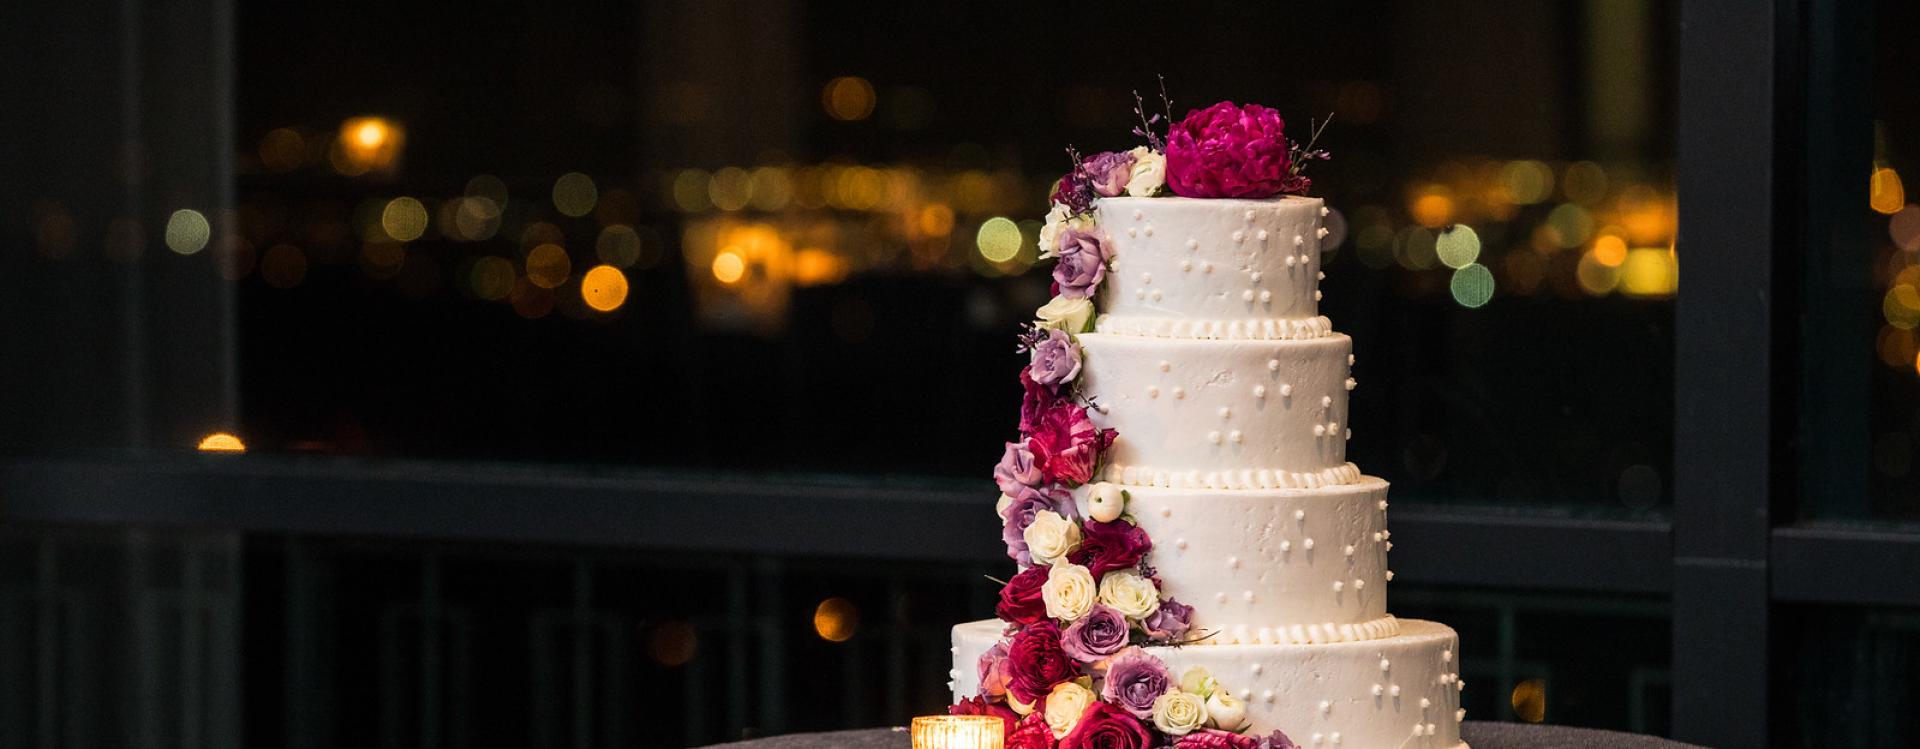 Iacocca Conference Center - Wedding Cake